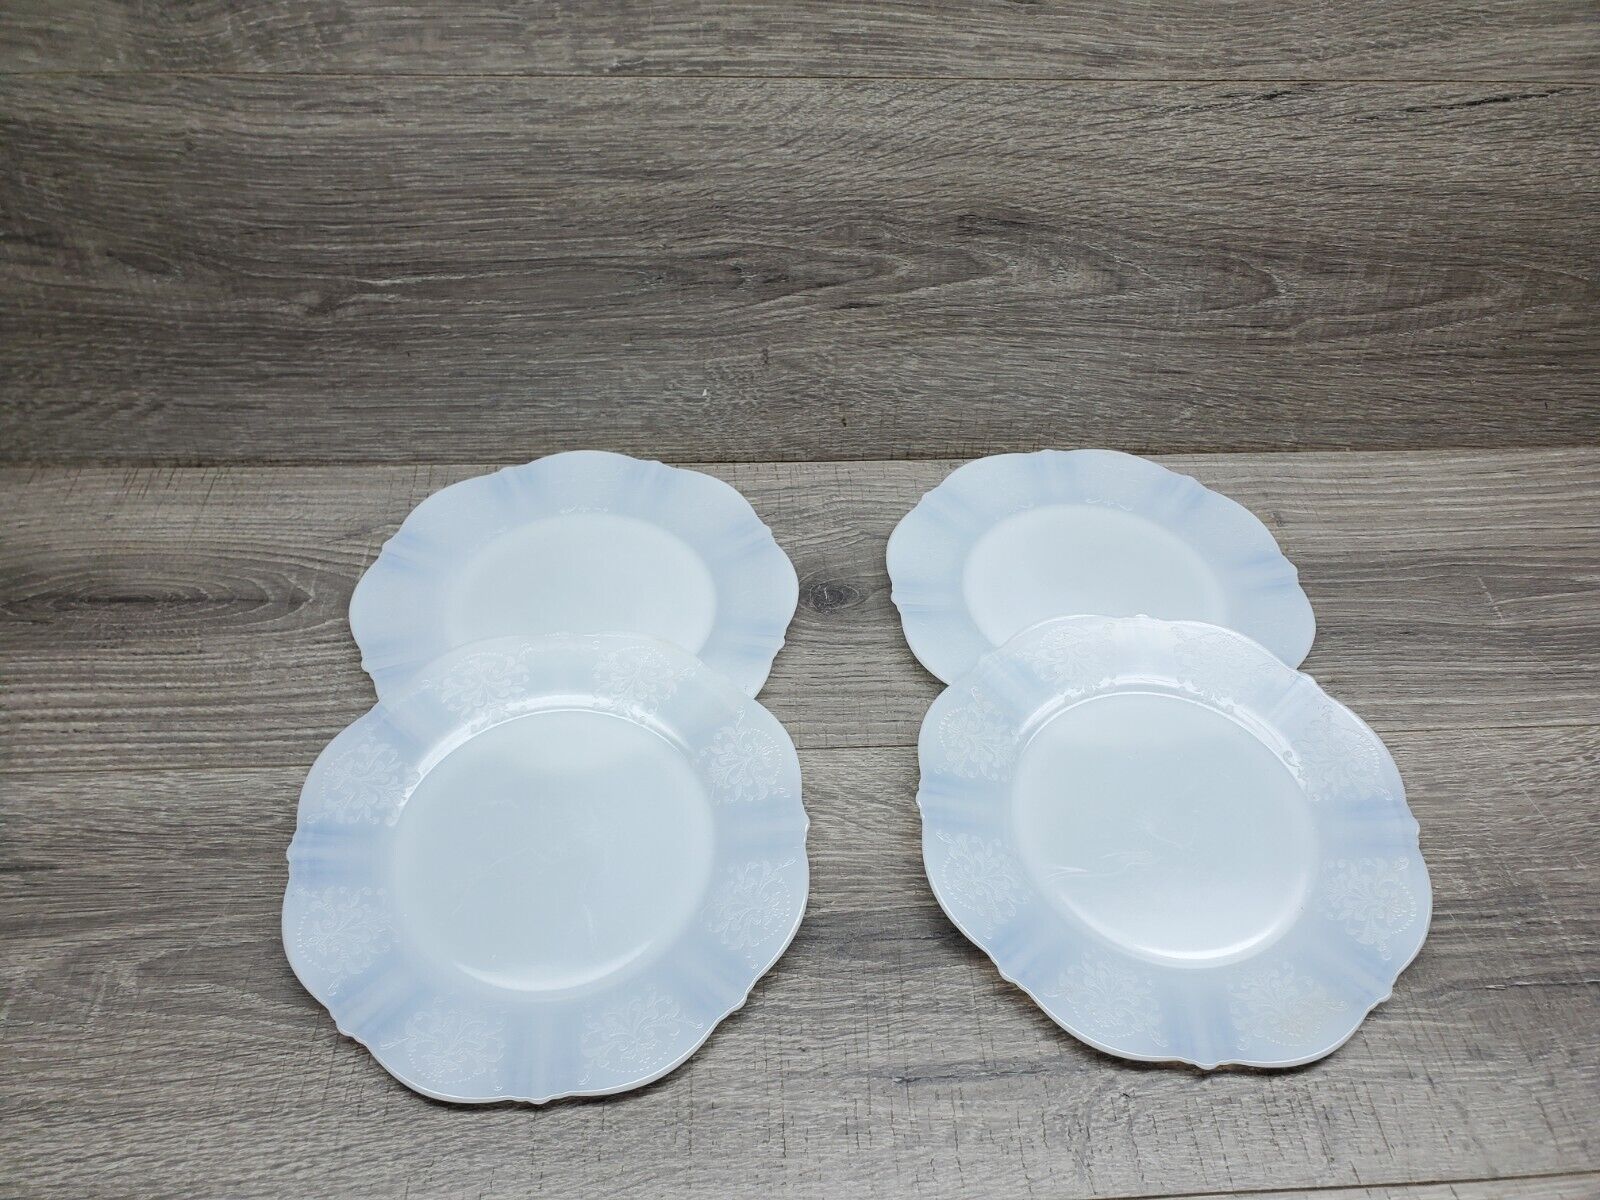 4 Vtg American Sweetheart Monax (White) by MACBETH-EVANS Milk Glass Plates